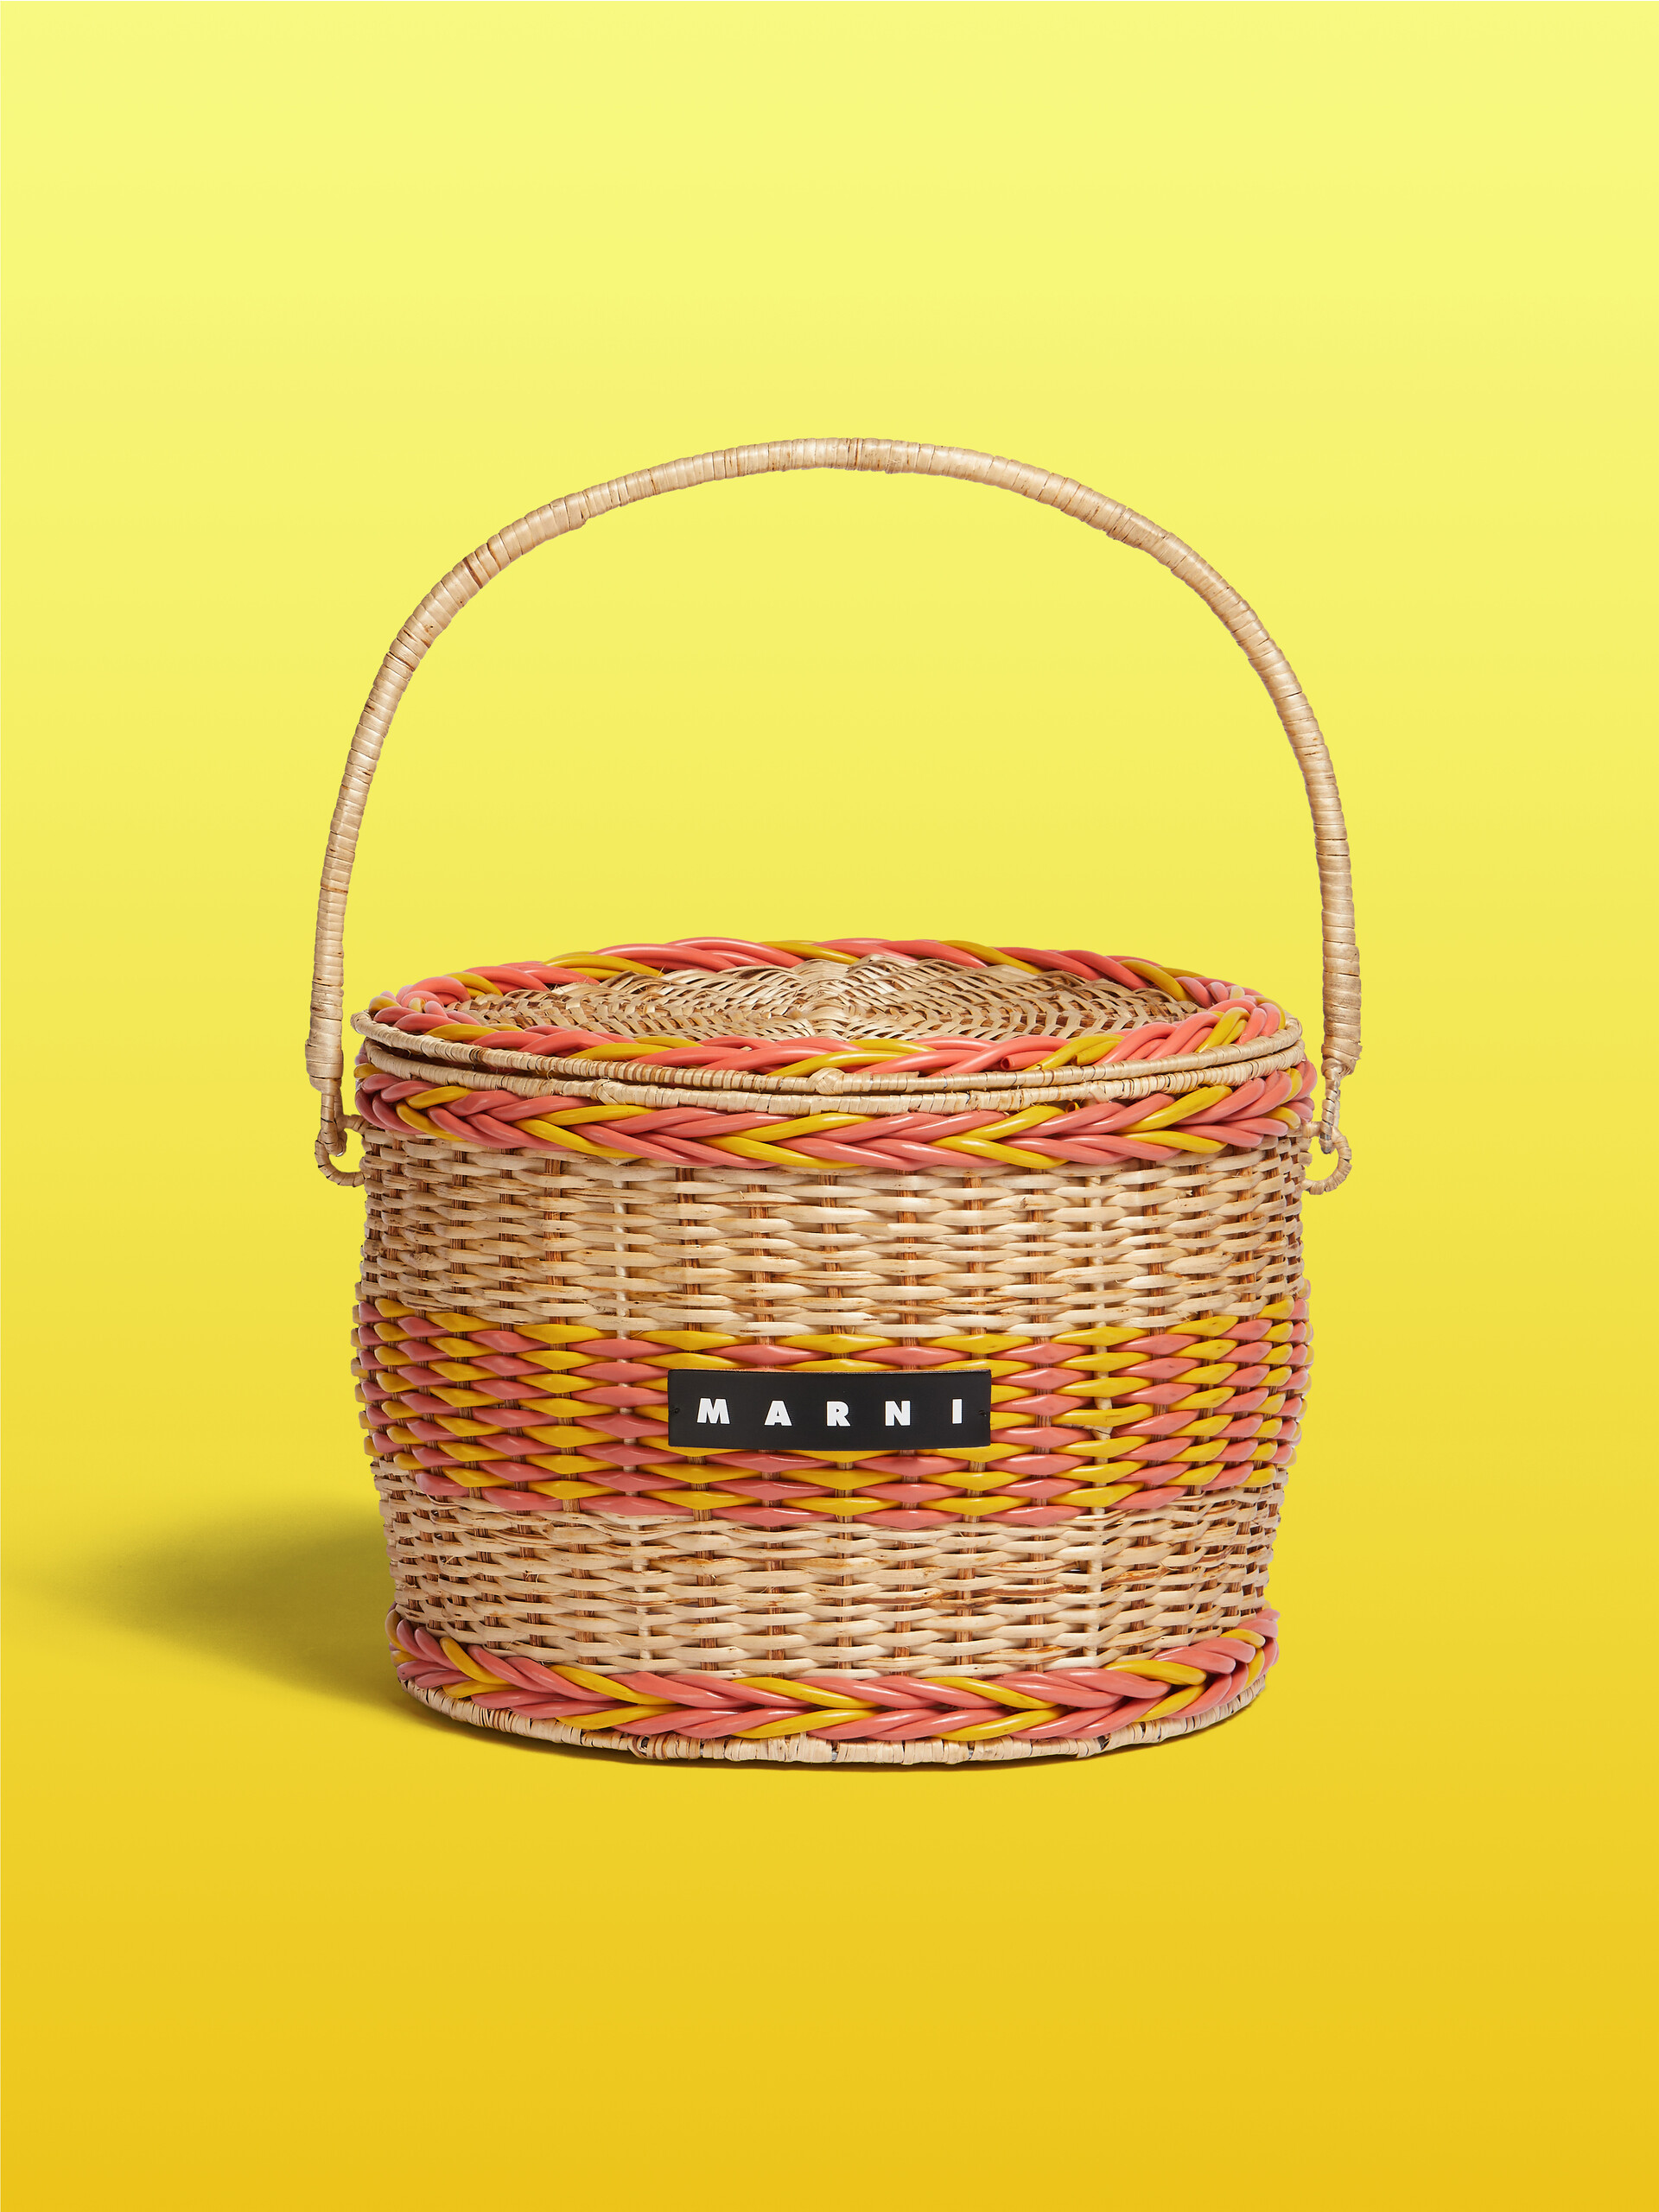 Orange natural fibre MARNI MARKET picnic basket - Accessories - Image 1